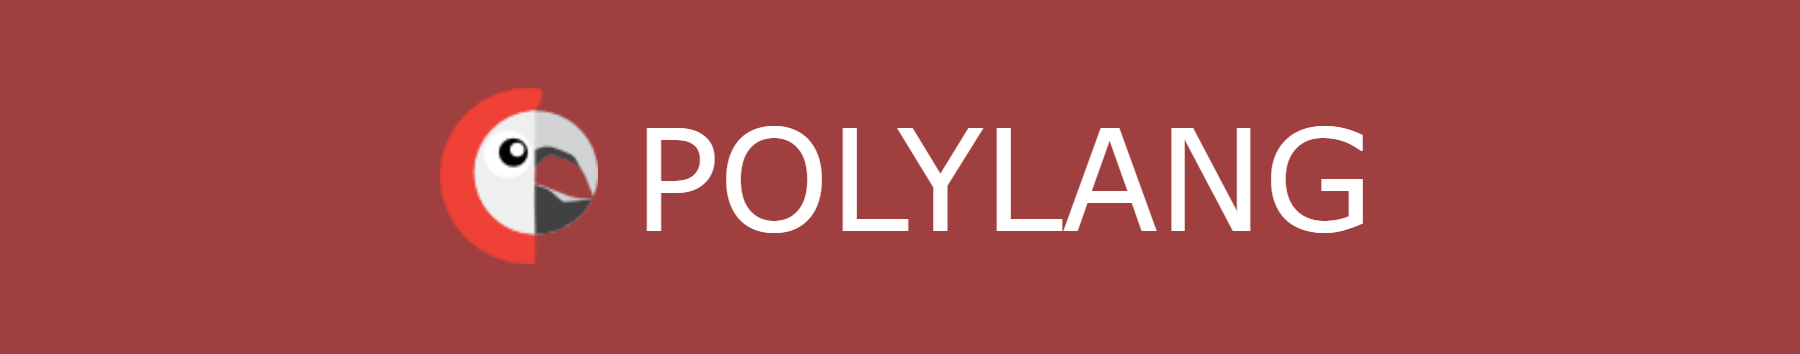 Polylang Multilingual Plugin Logo